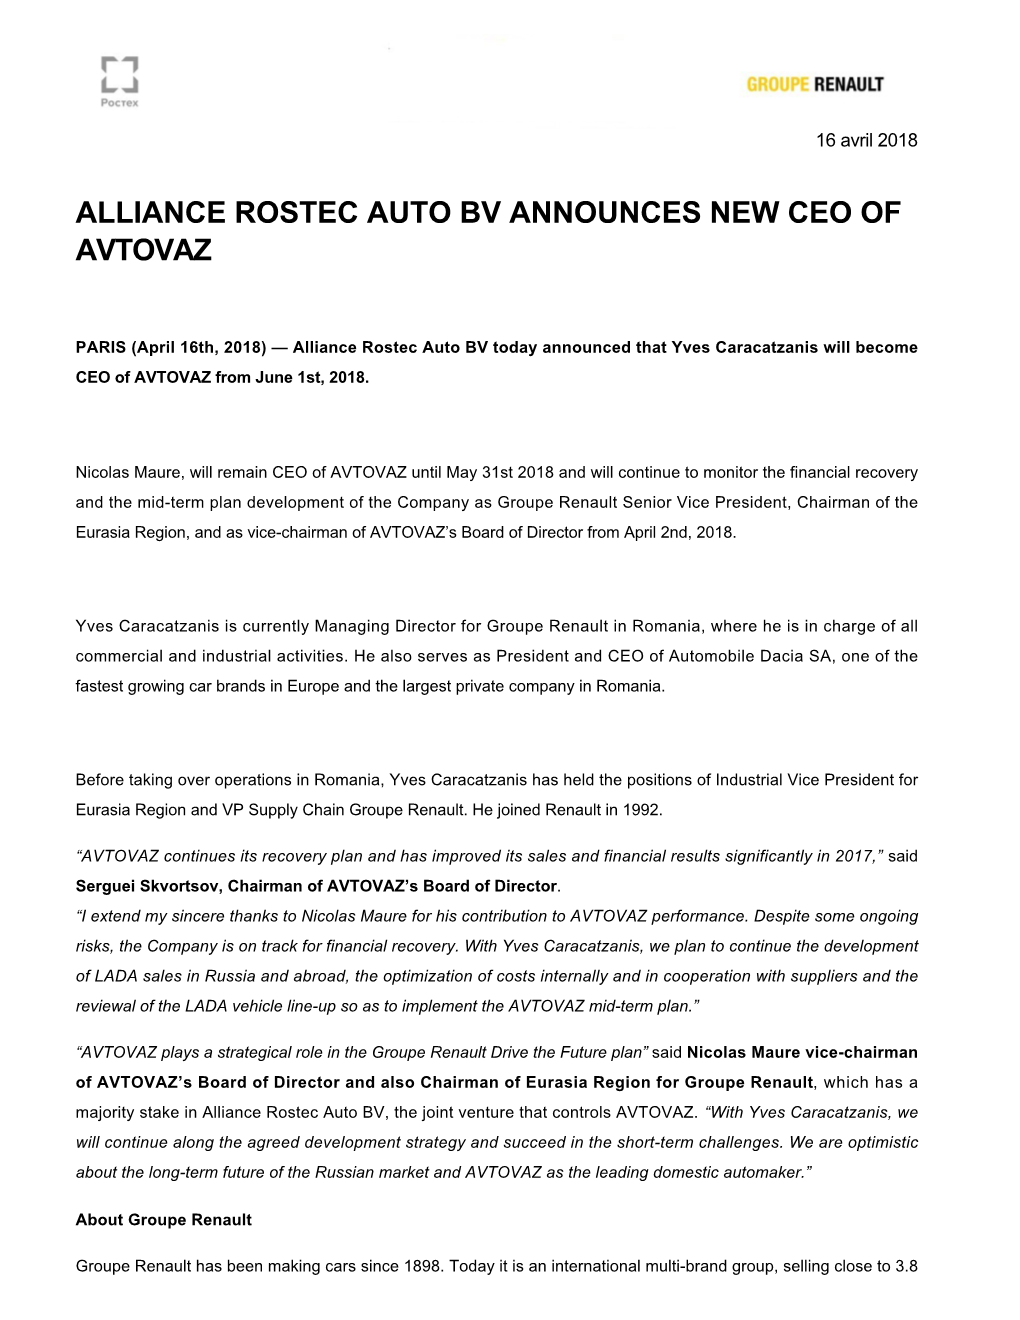 Alliance Rostec Auto Bv Announces New Ceo of Avtovaz